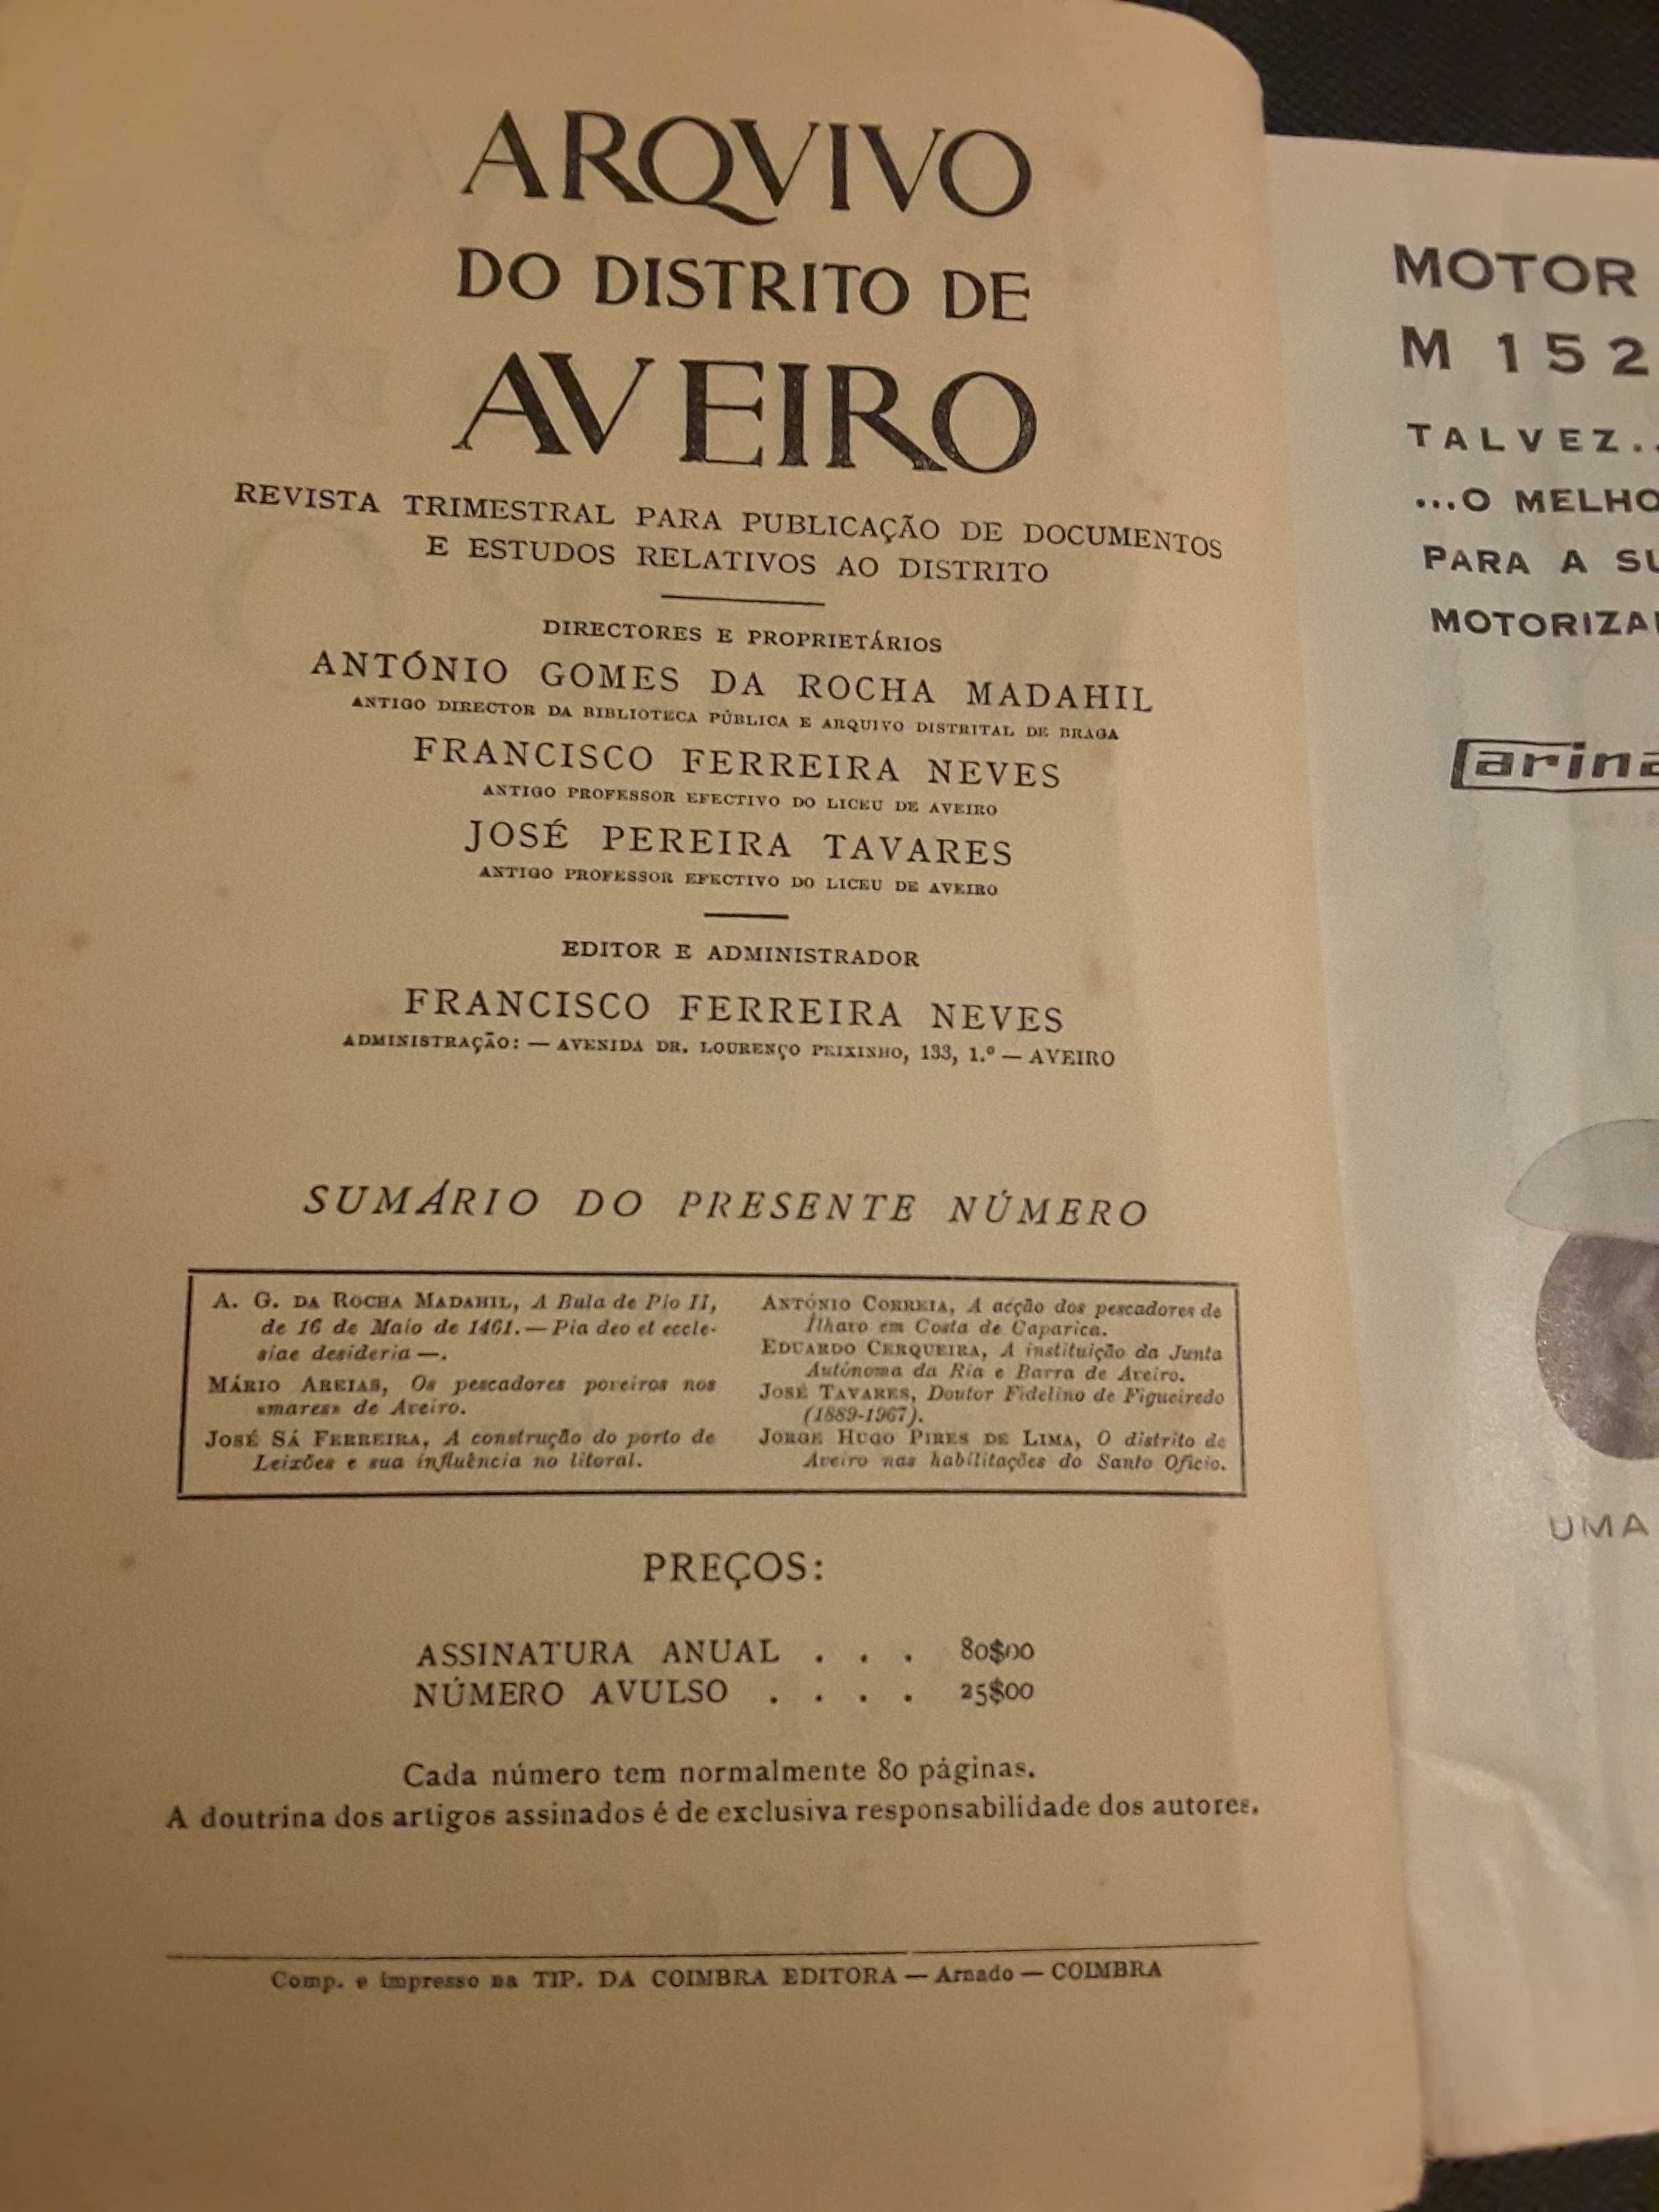 Aveiro Gerência (1960) / Arquivos do Distrito de Aveiro